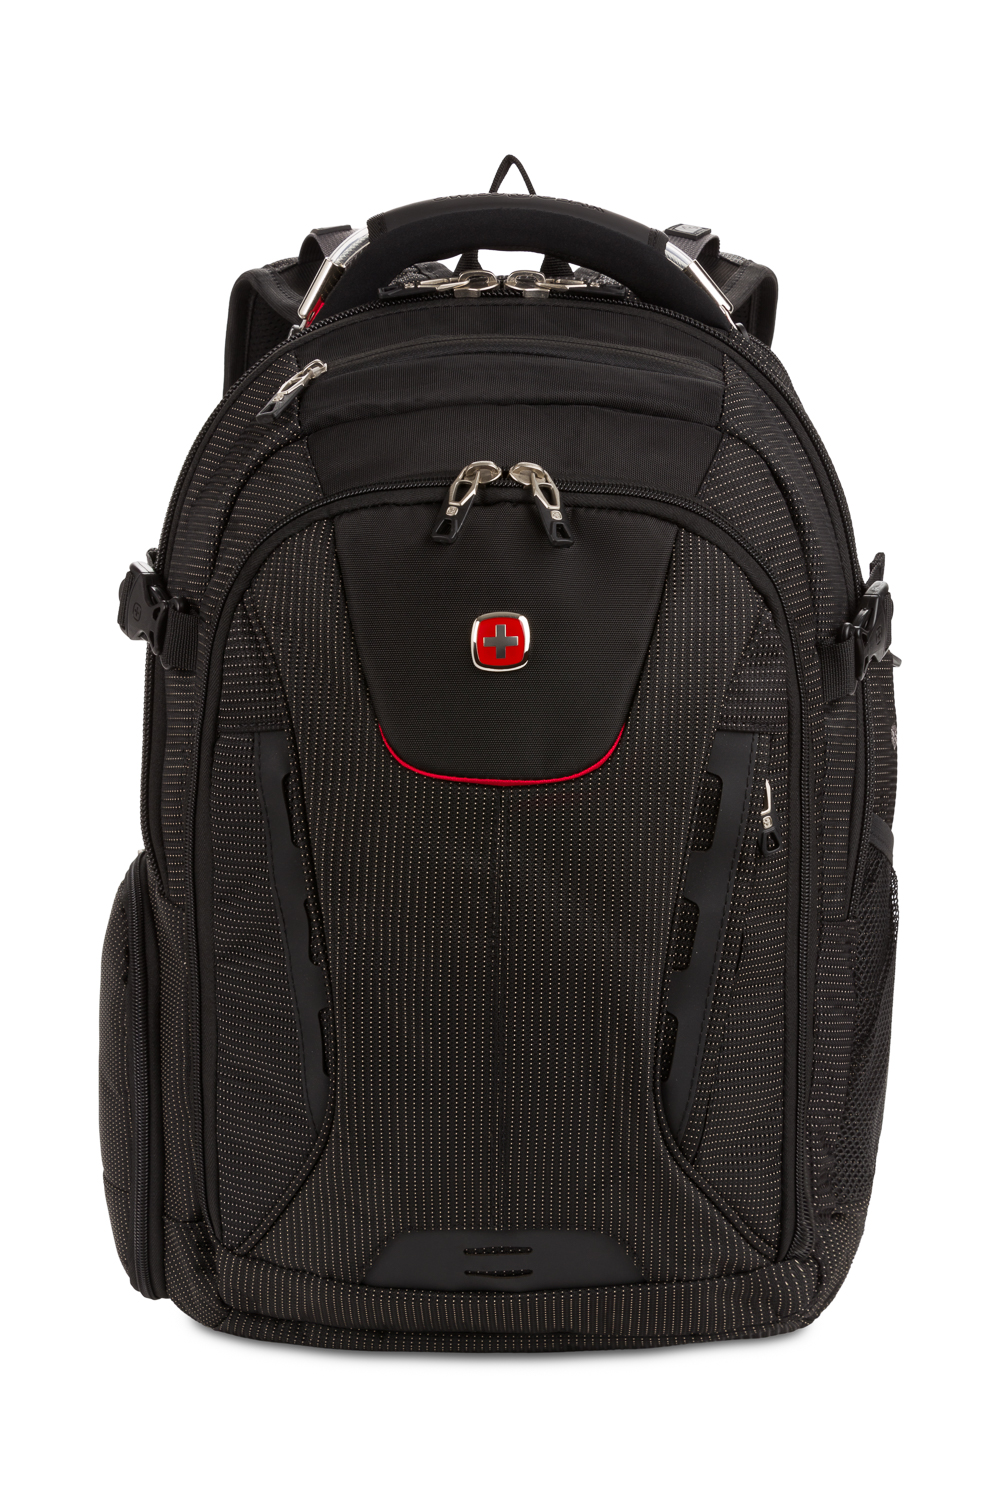 Abrasion-Resistant & Travel-Friendly Laptop Backpack Exclusive Bundle with Lock SwissGear 5358 USB ScanSmart Laptop Backpack 